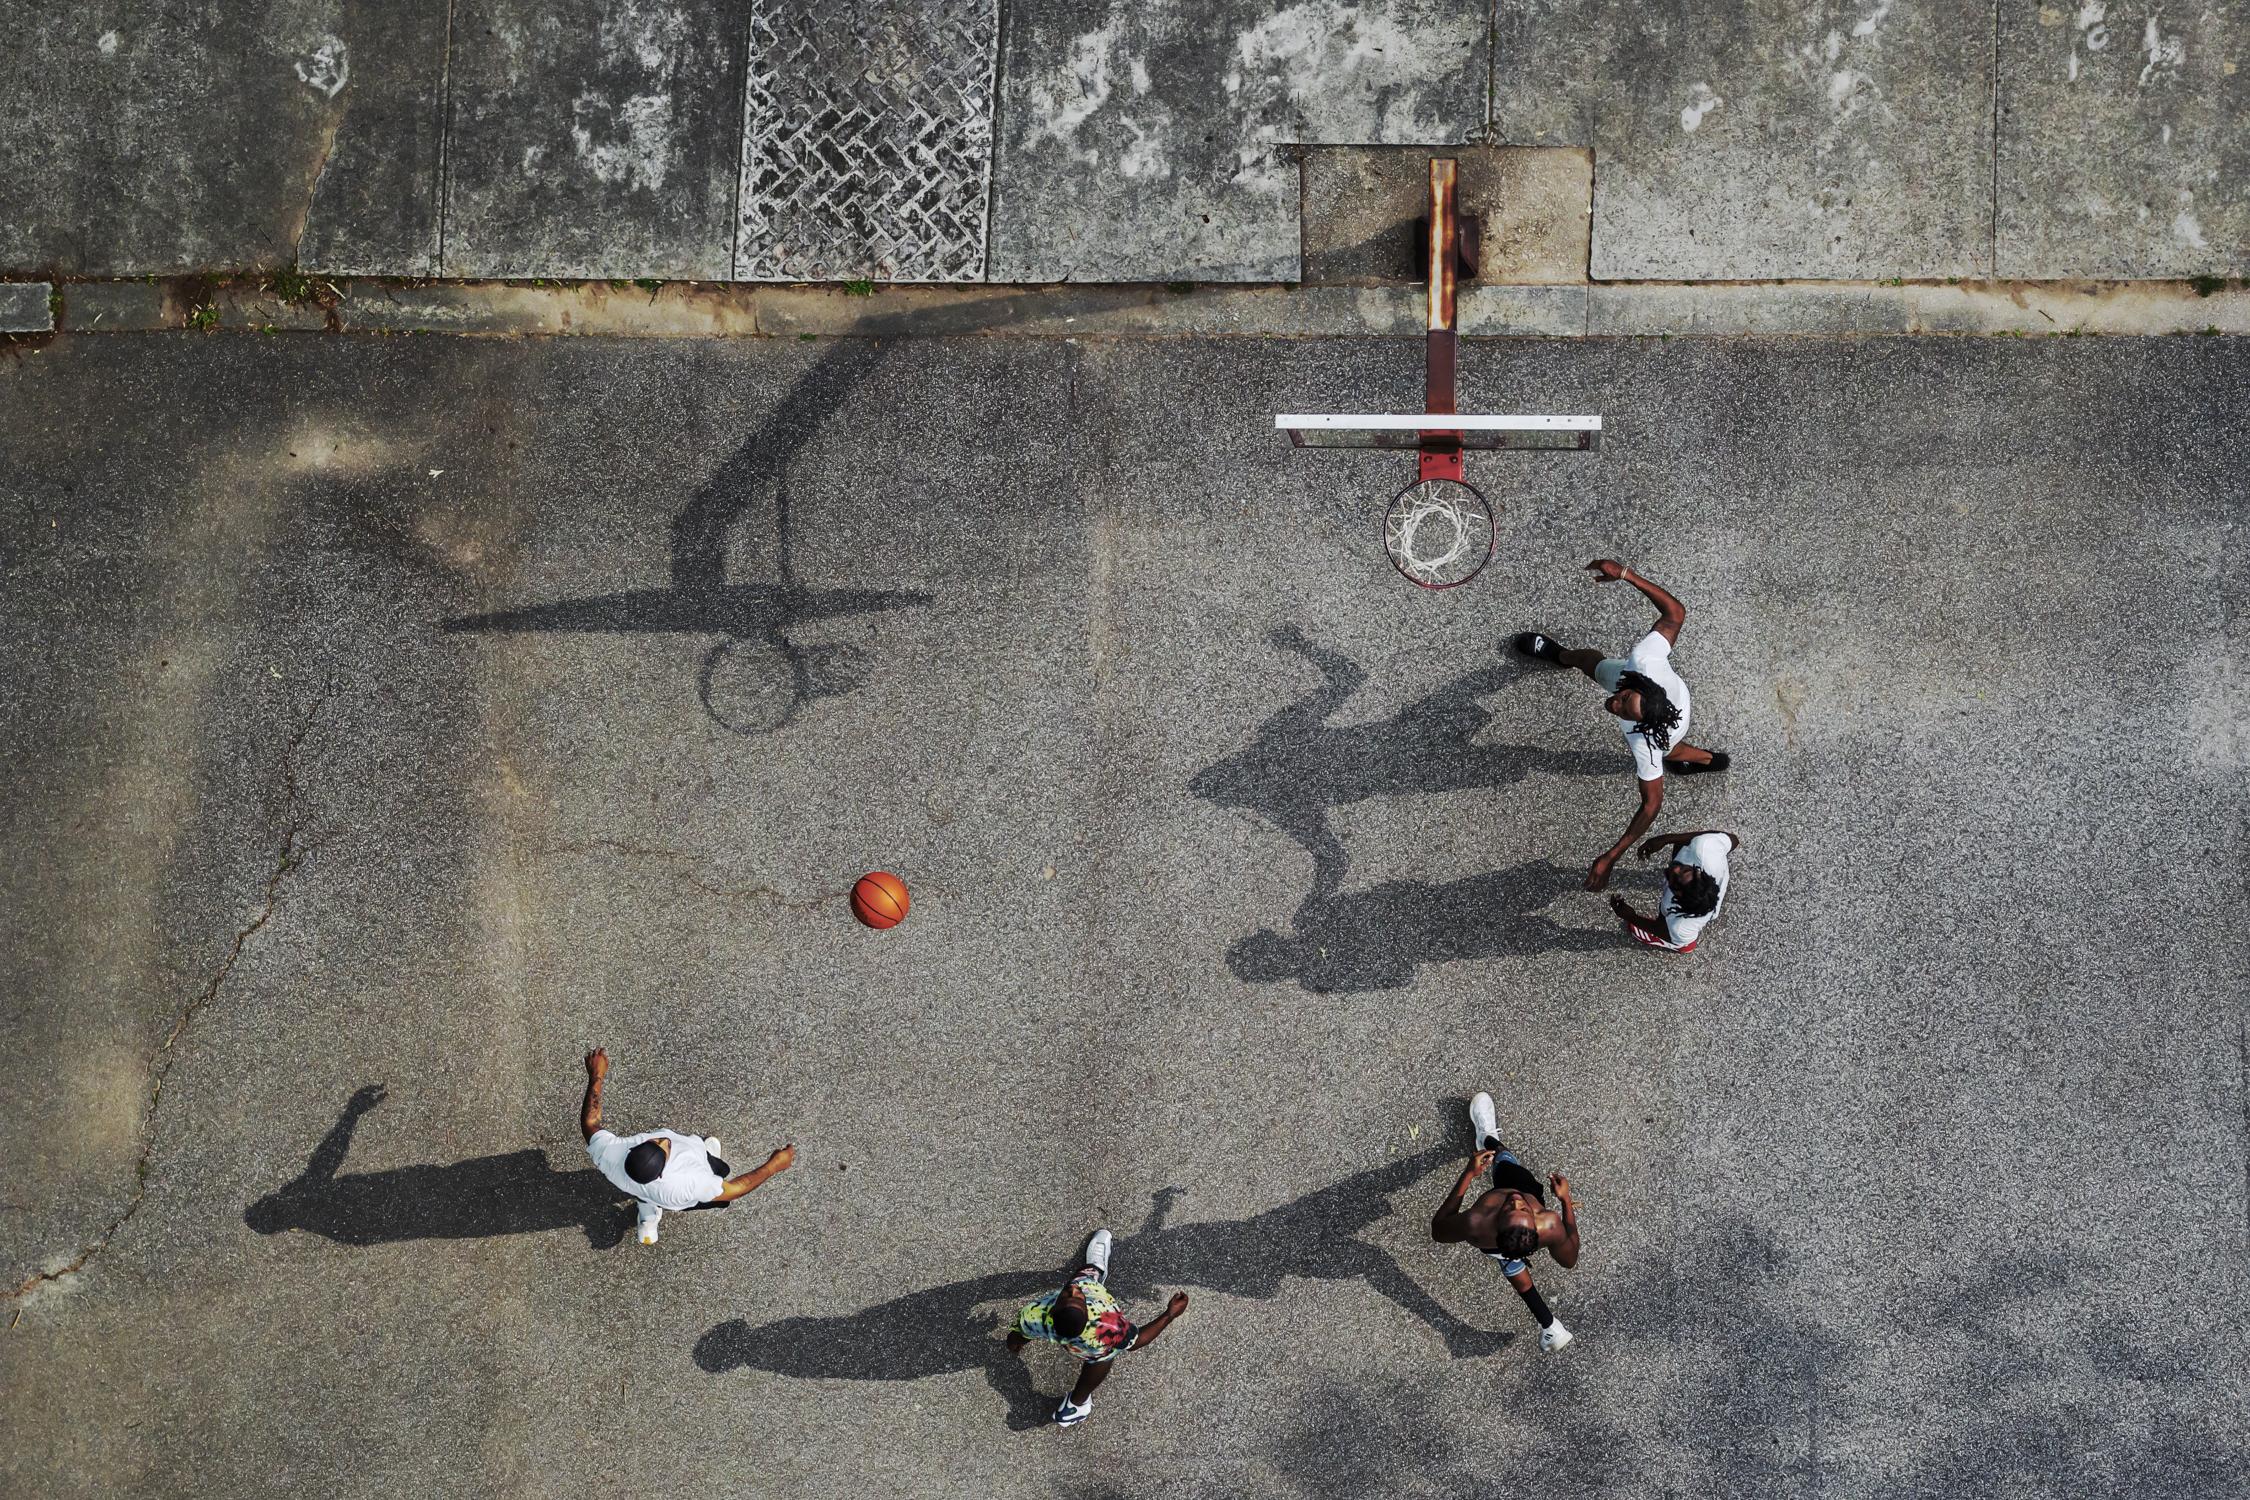 Color Photograph Peter Essick - paysage urbain, basket-ball, sport, 2617 Memorial Drive, Atlanta, GA